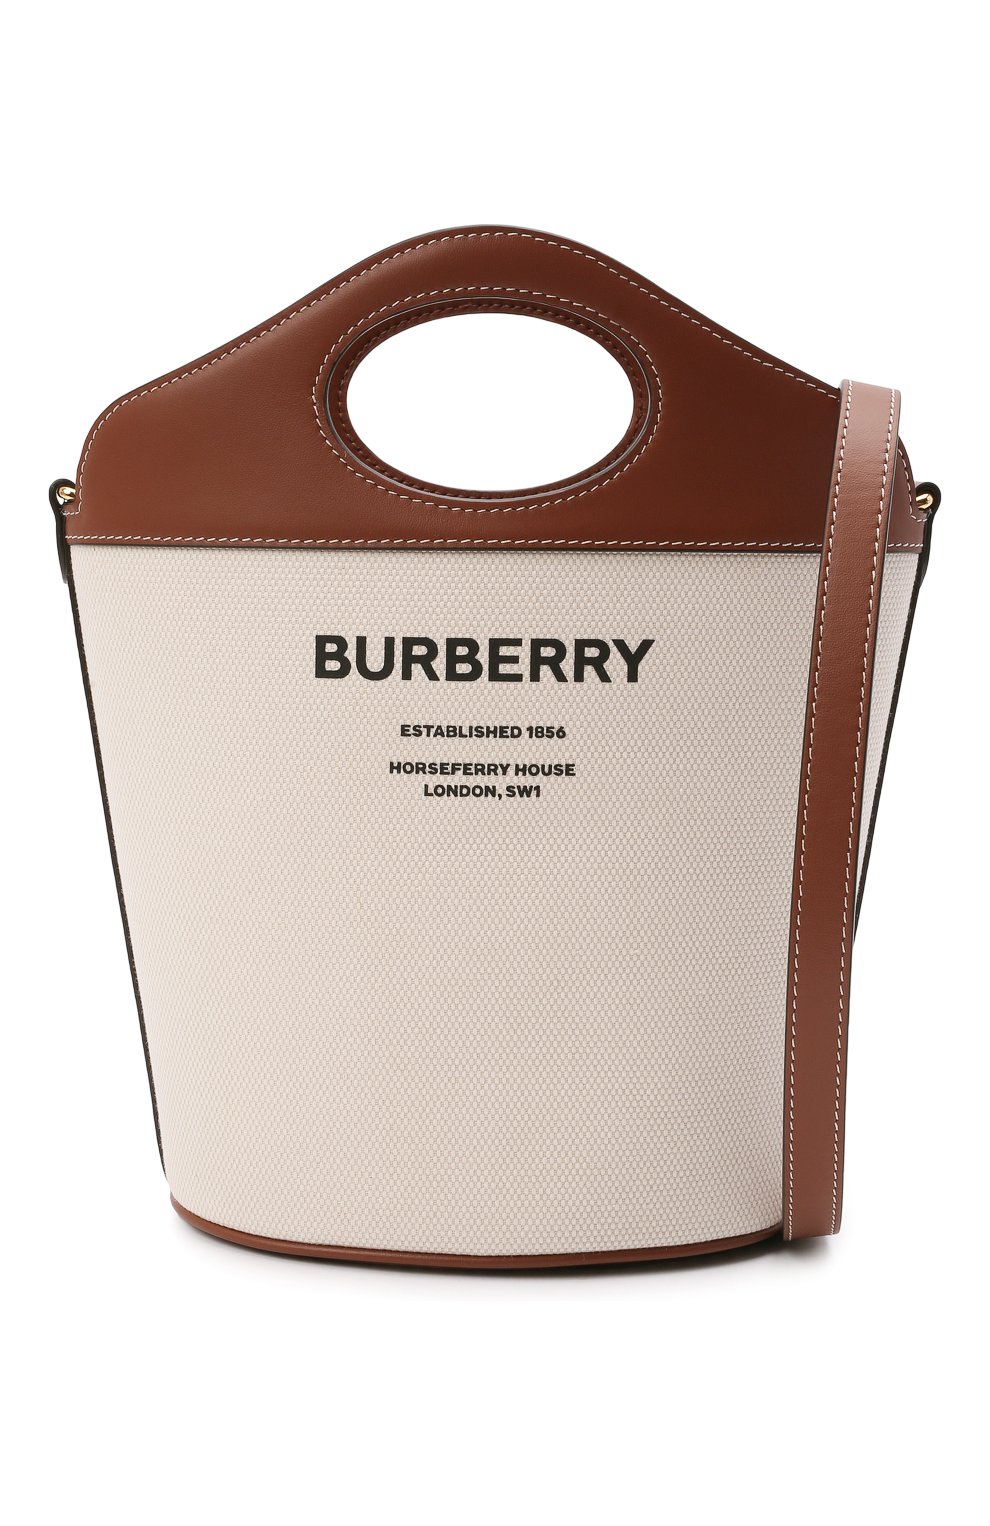 Женская сумка pocket BURBERRY светло-коричневого цвета, арт. 8046242 | Фото 7 (Сумки-технические: Сумки через плечо, Сумки top-handle; Ремень/цепочка: На ремешке; Материал: Текстиль; Размер: small)